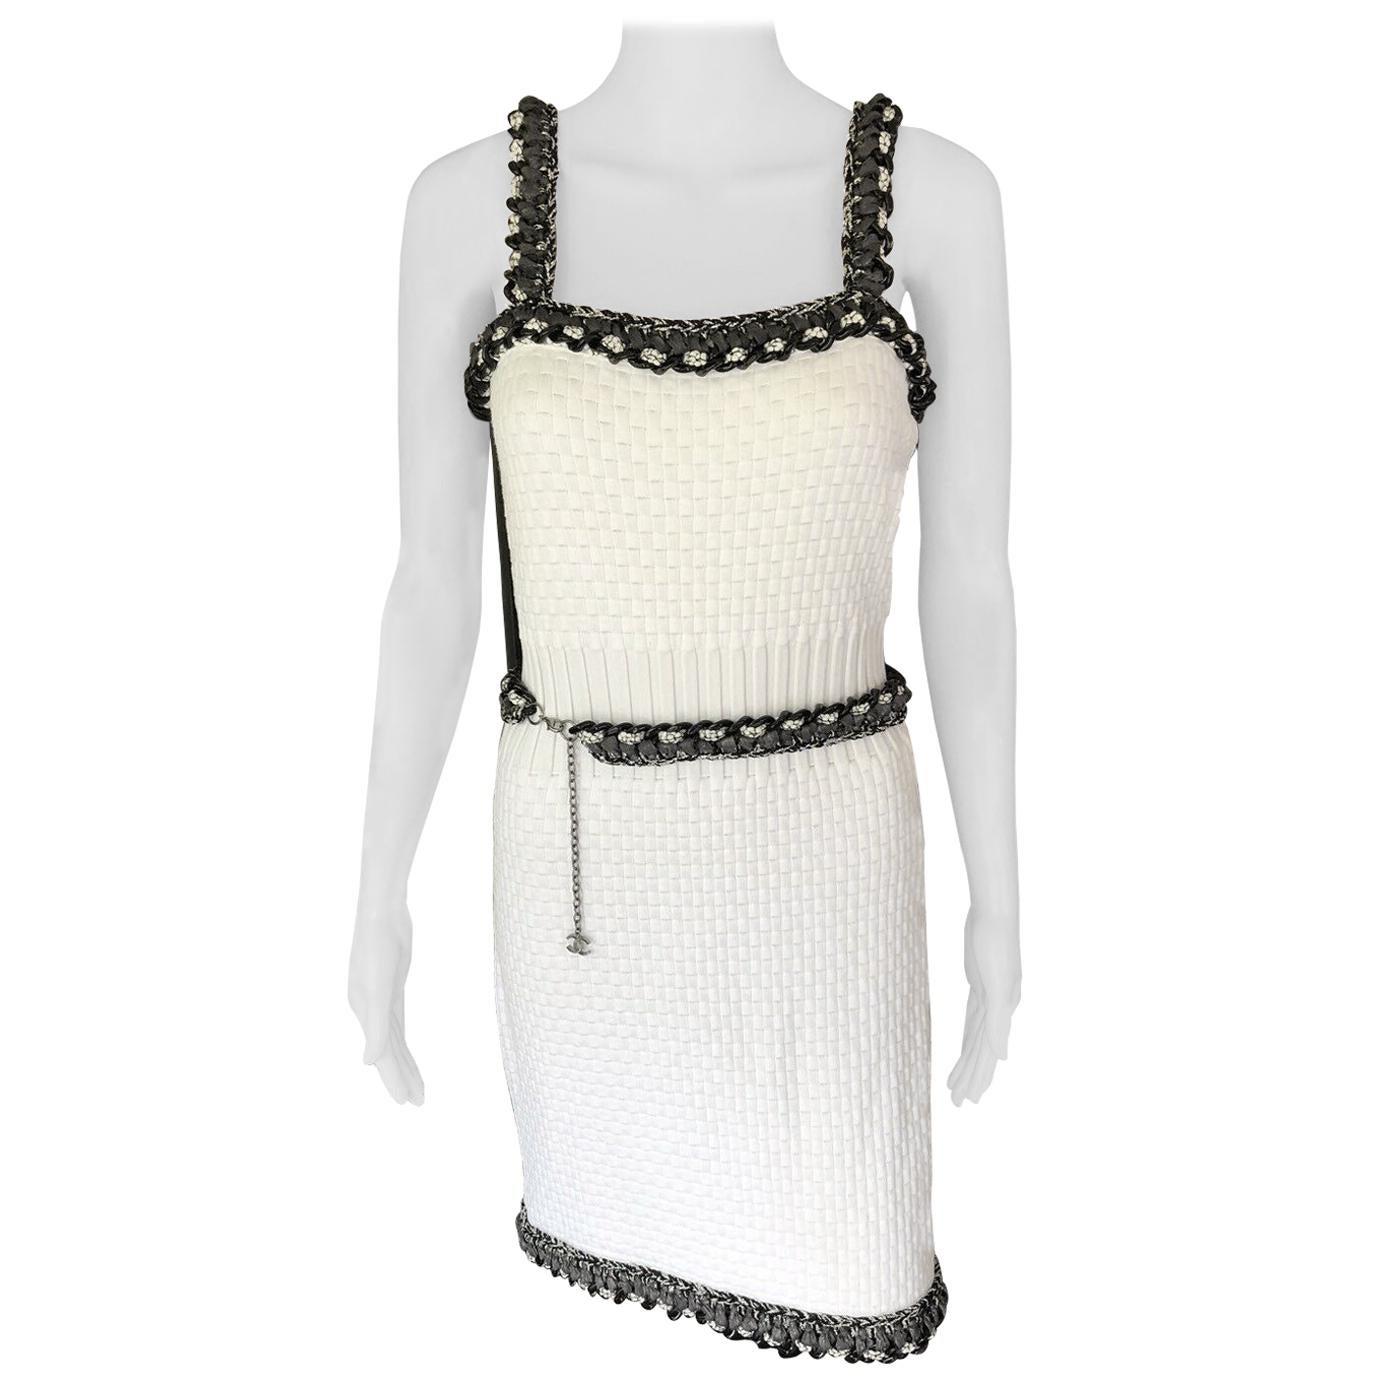 New Chanel S/S 2014 Runway Knit Chain Embellished Trim White Mini Dress